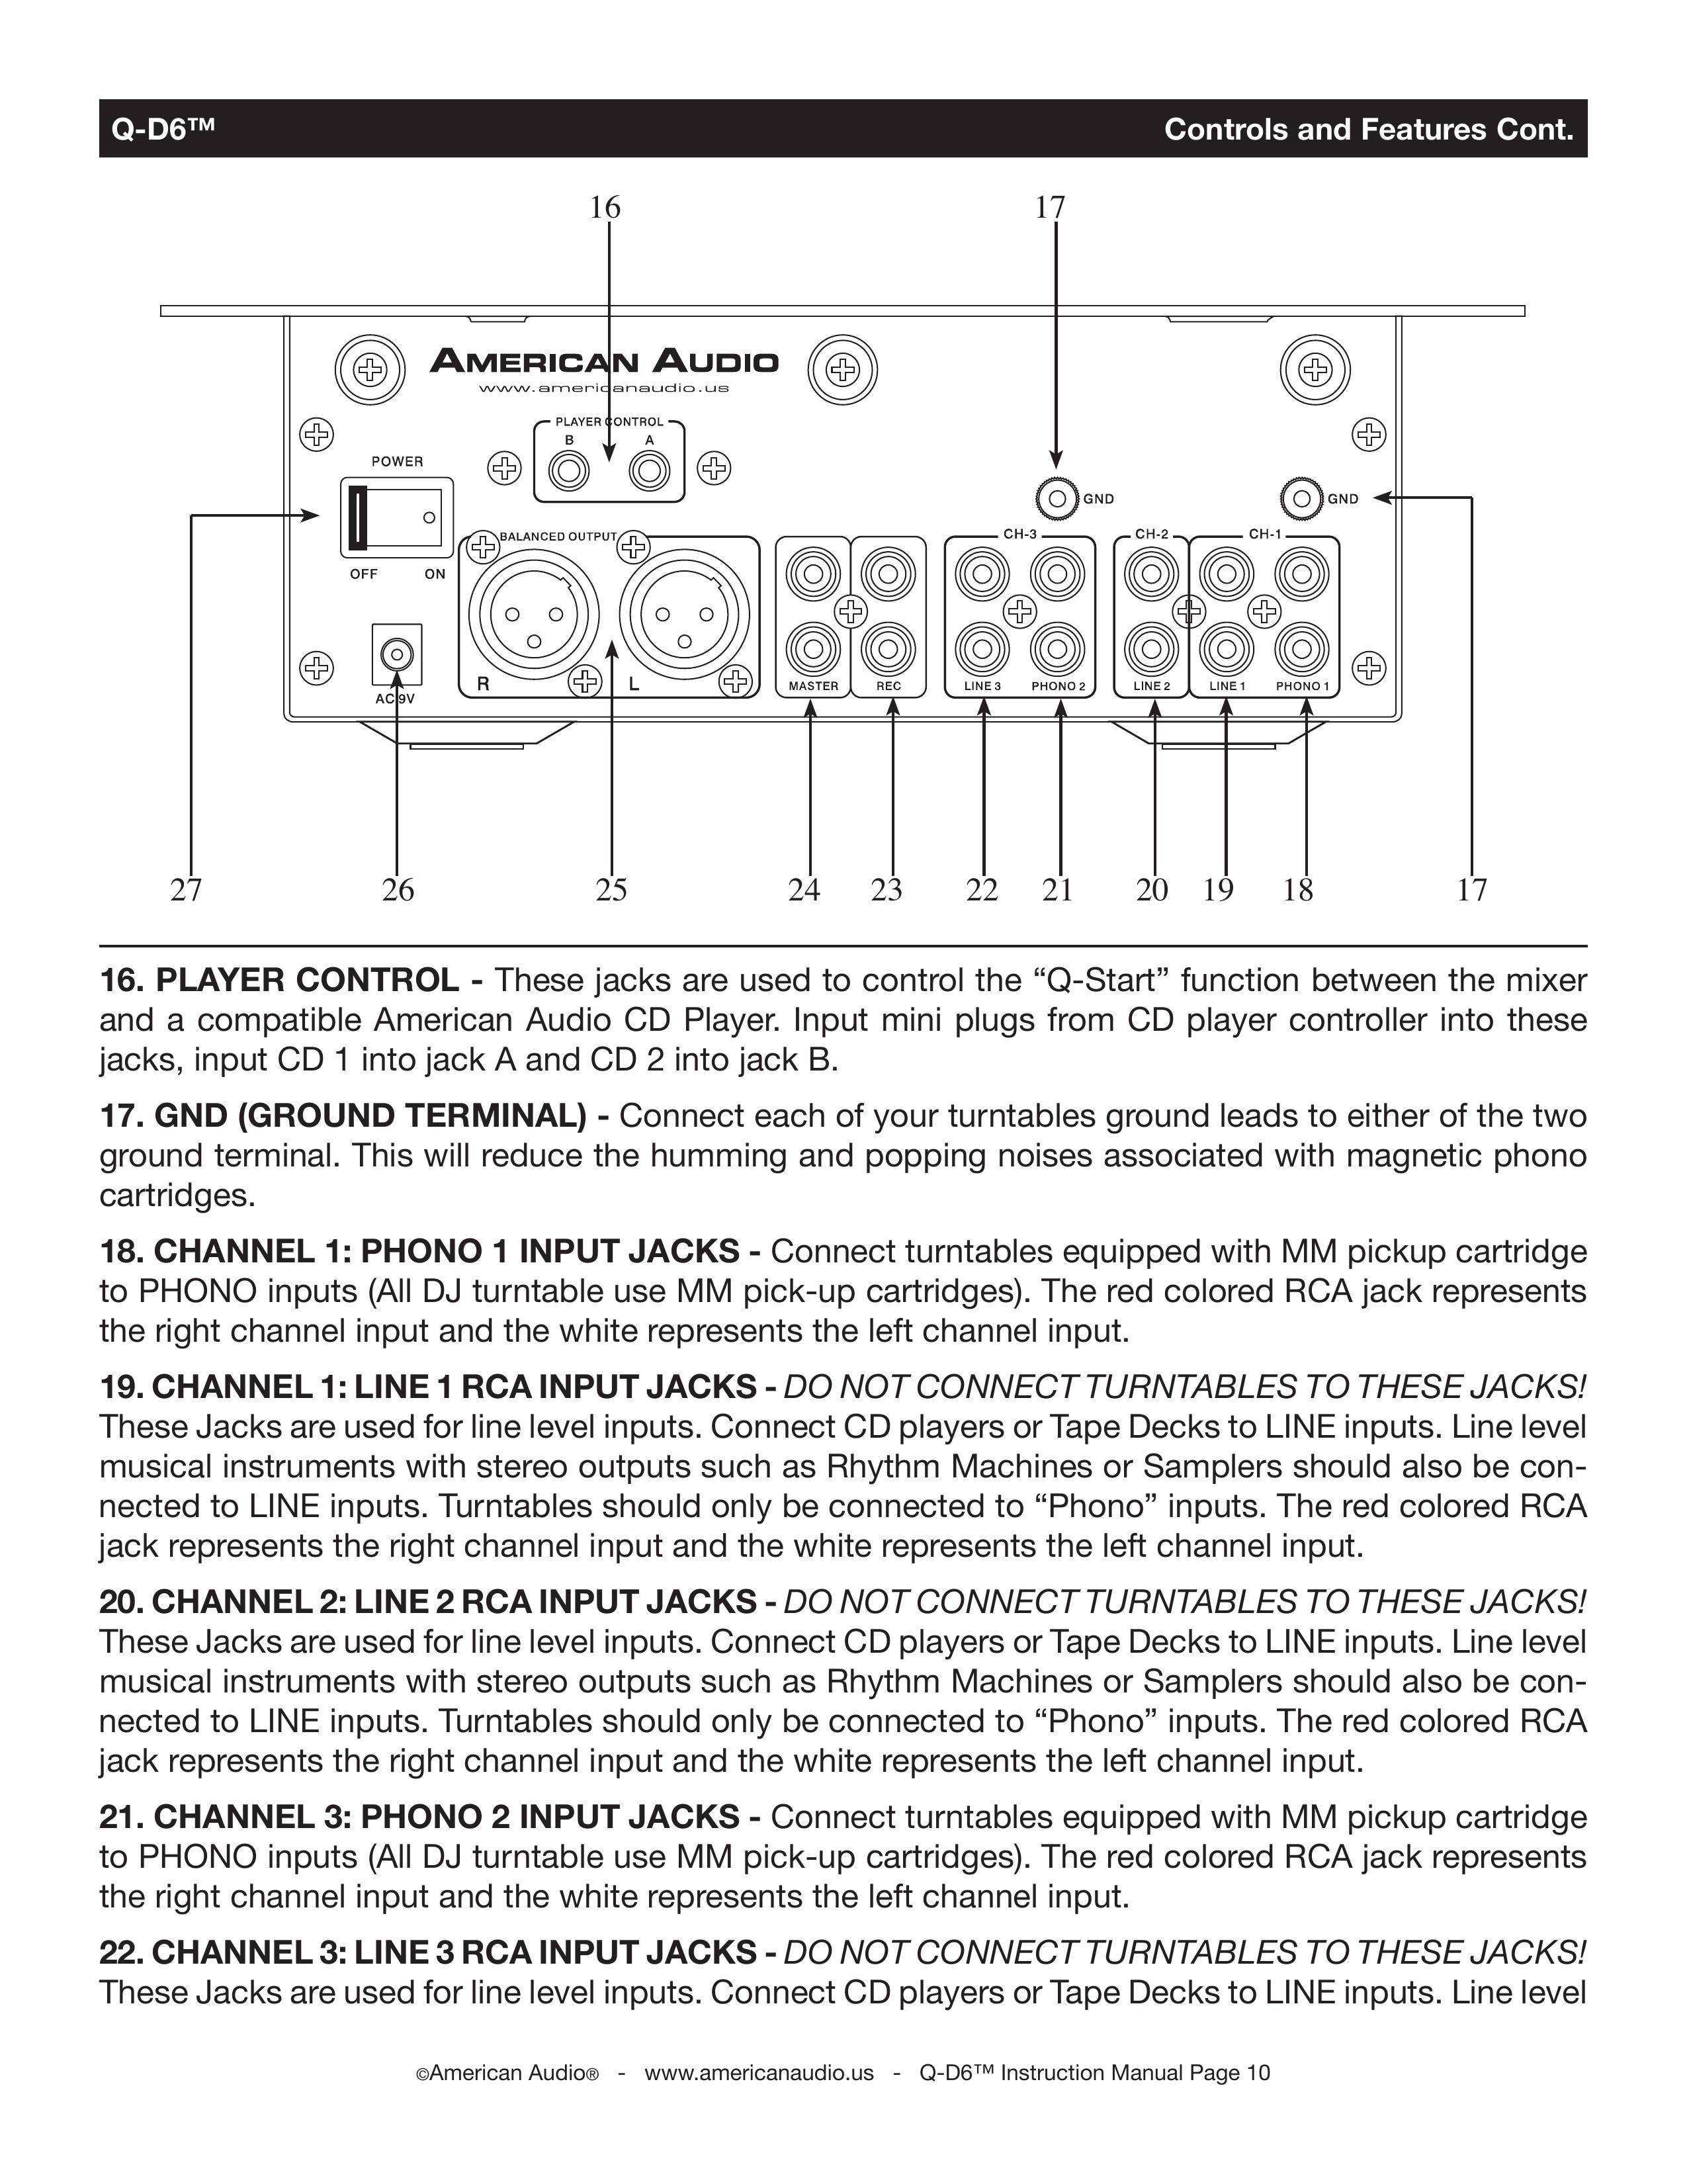 American Audio q-d6 DJ Equipment User Manual (Page 10)